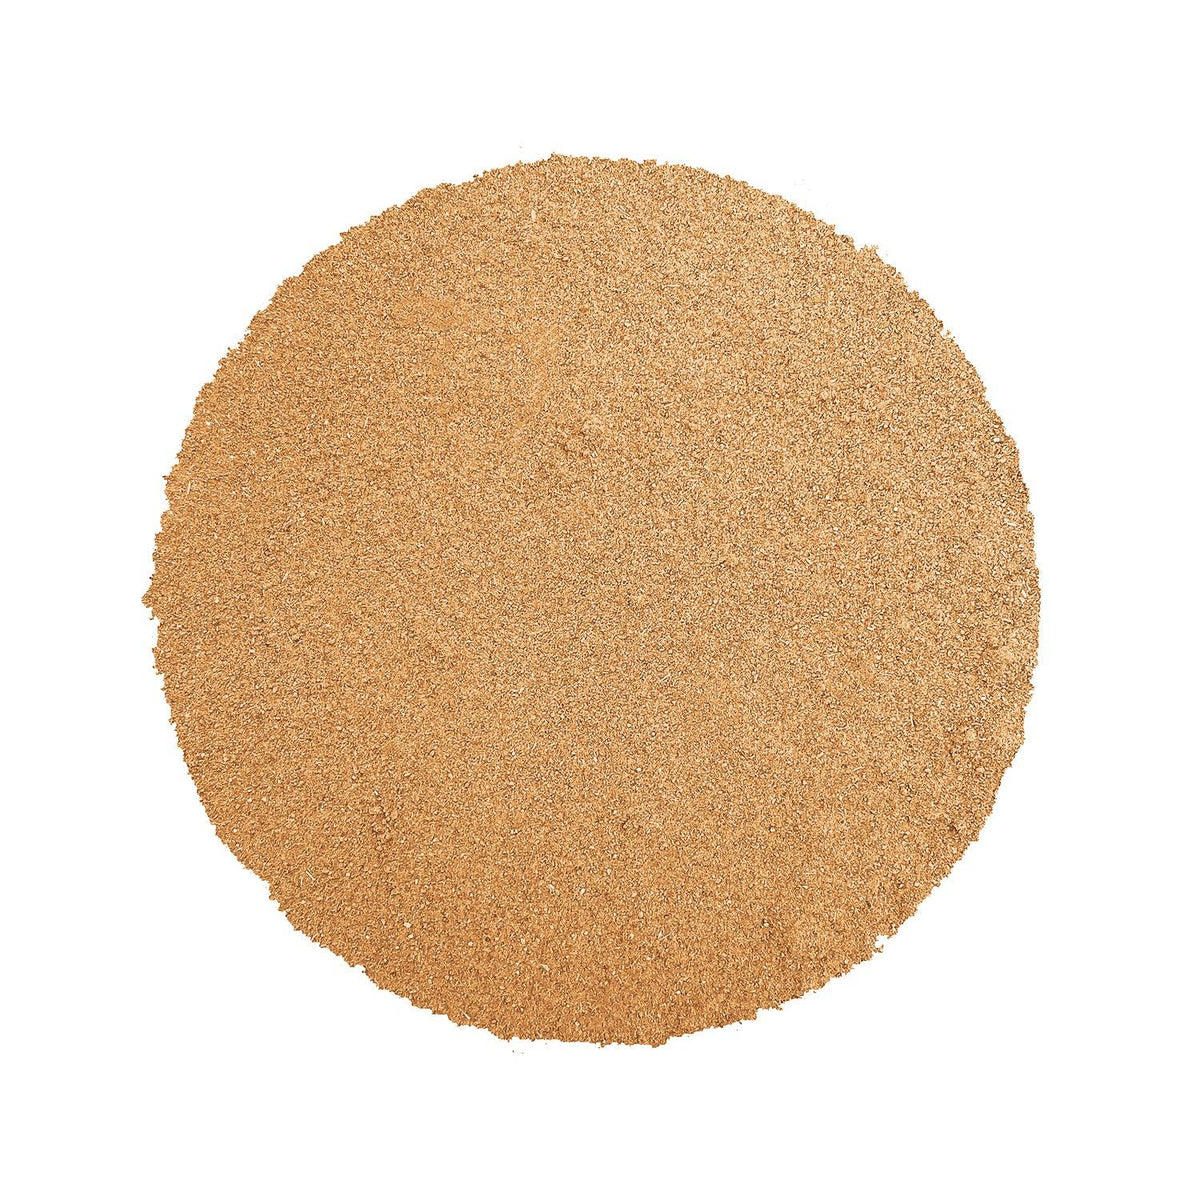 Dalchini Peesi - Cinnamon Ceylon C5 Powder 100g - Purely Organic & Rarely found quality; also Known as True/ Real Cinnamon - Satopradhan